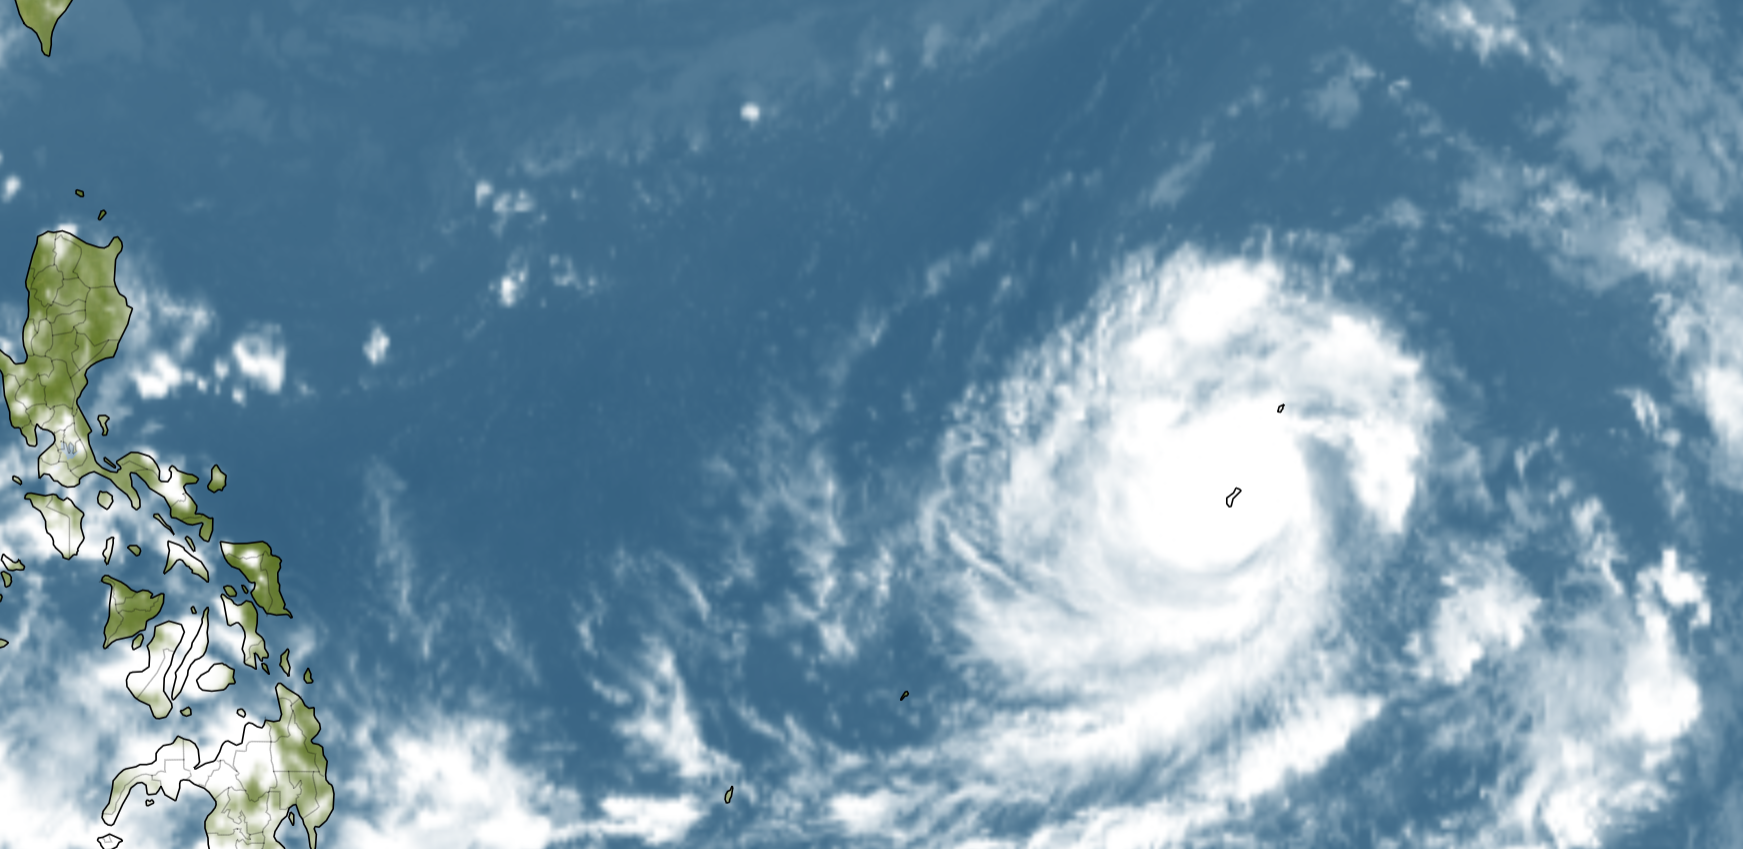 Tyfoon Mawar ligt op dit moment pal boven Guam.